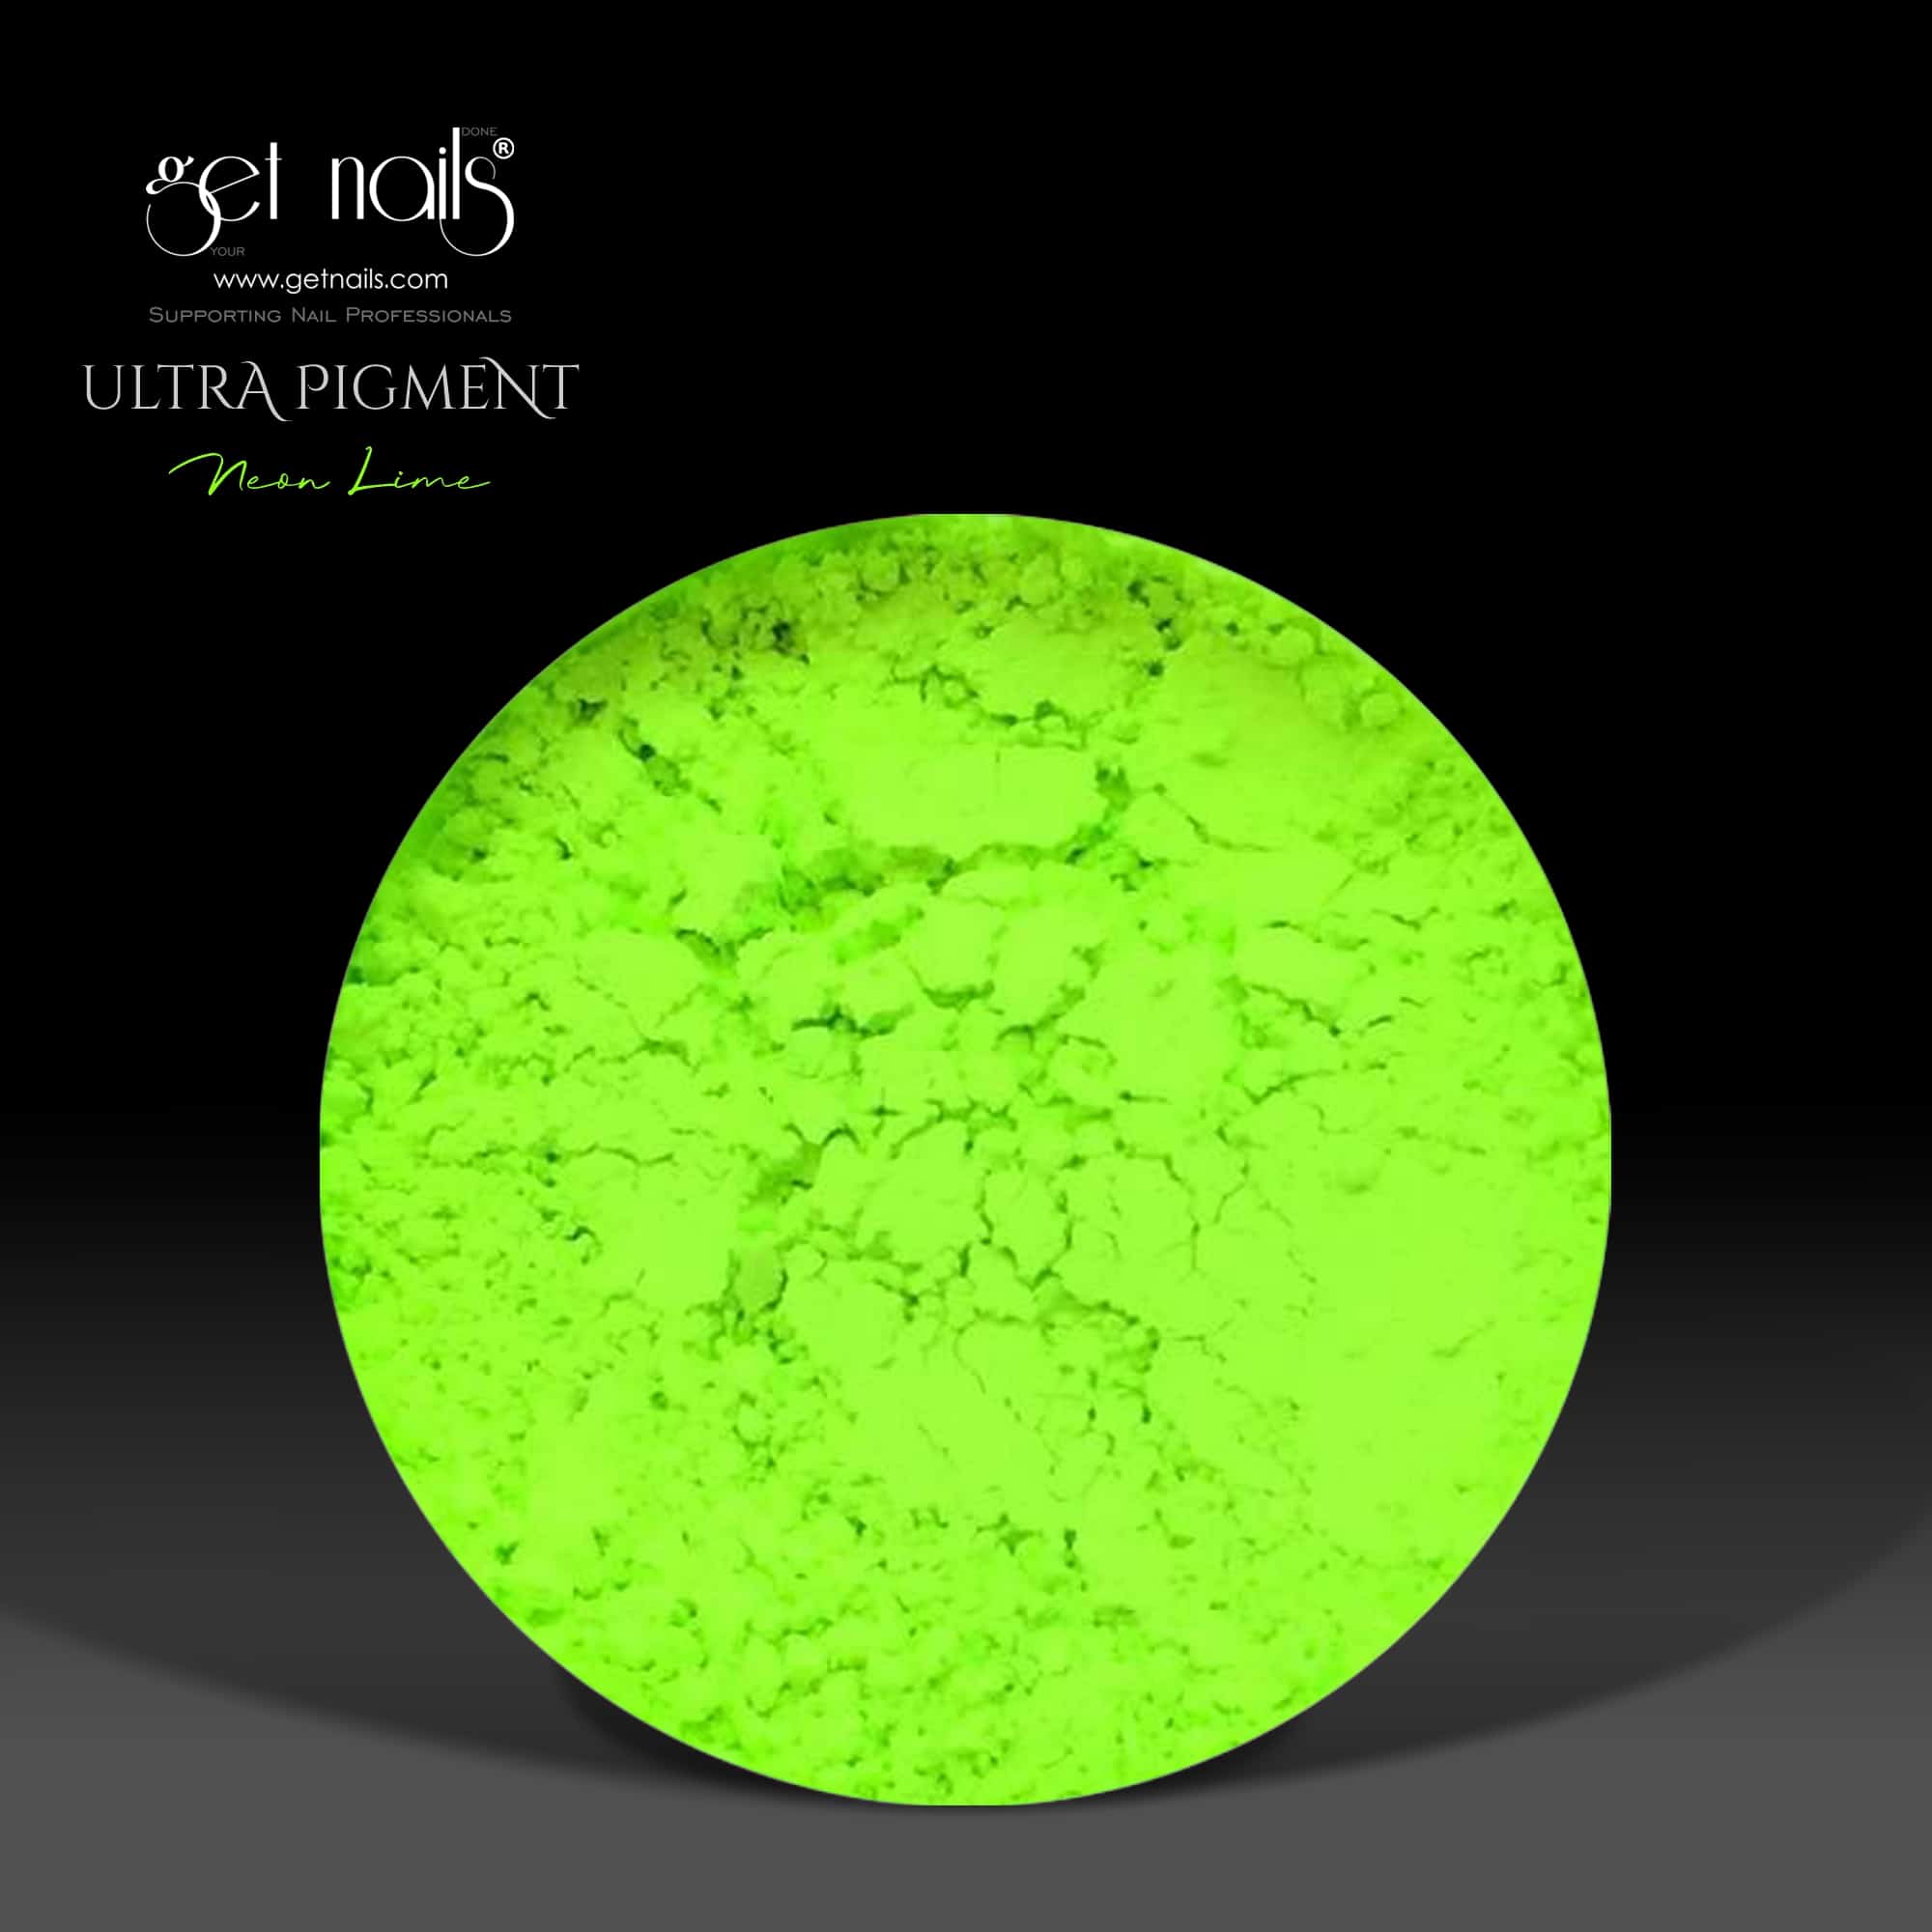 Get Nails Austria - Ultra Pigment Neon Lime 1.5 g